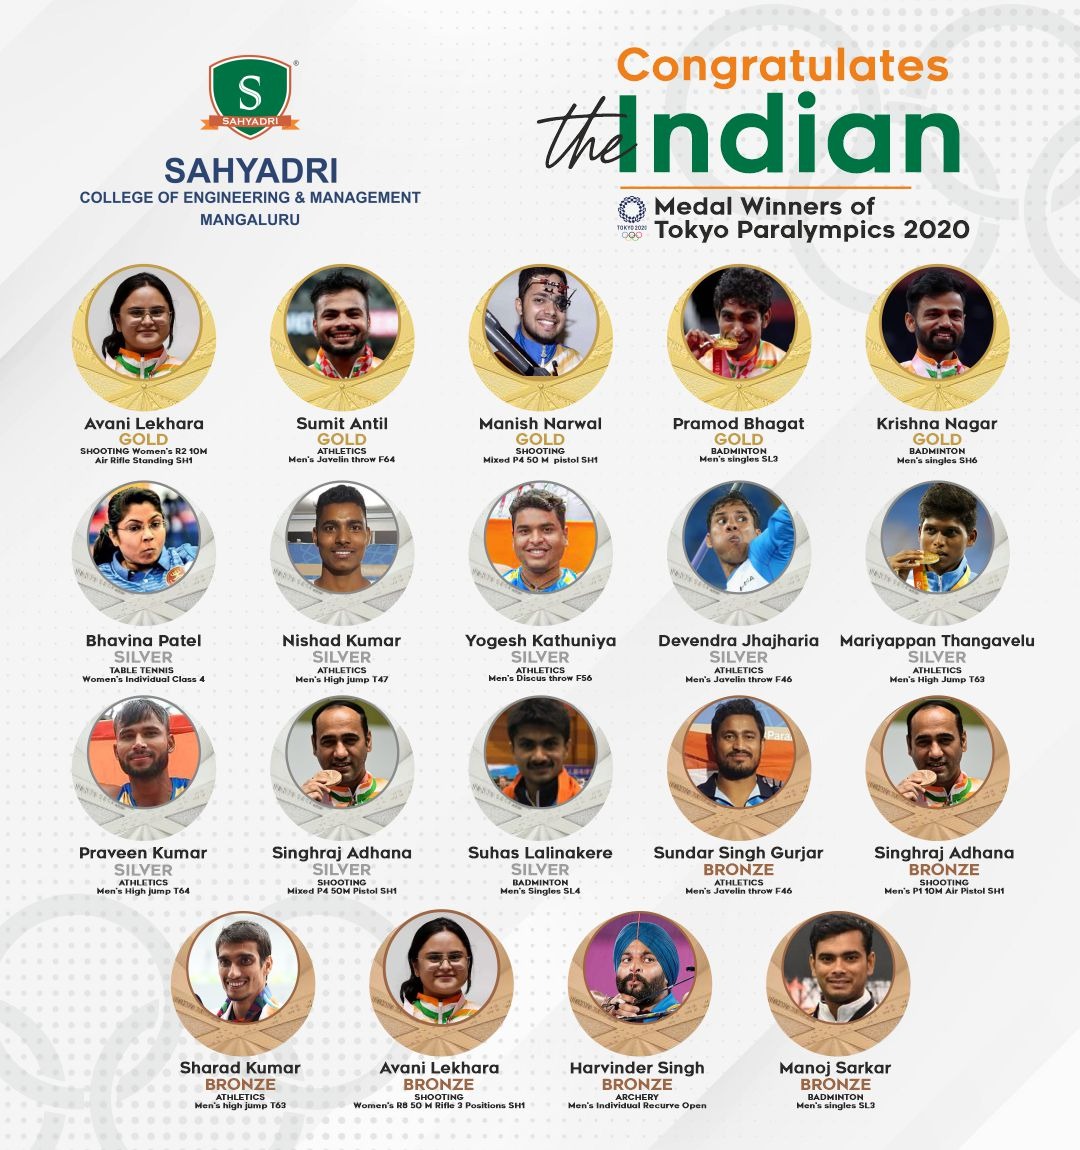 Sahyadri Congratulates the 19 Indian Medal Winners at Tokyo Paralympics